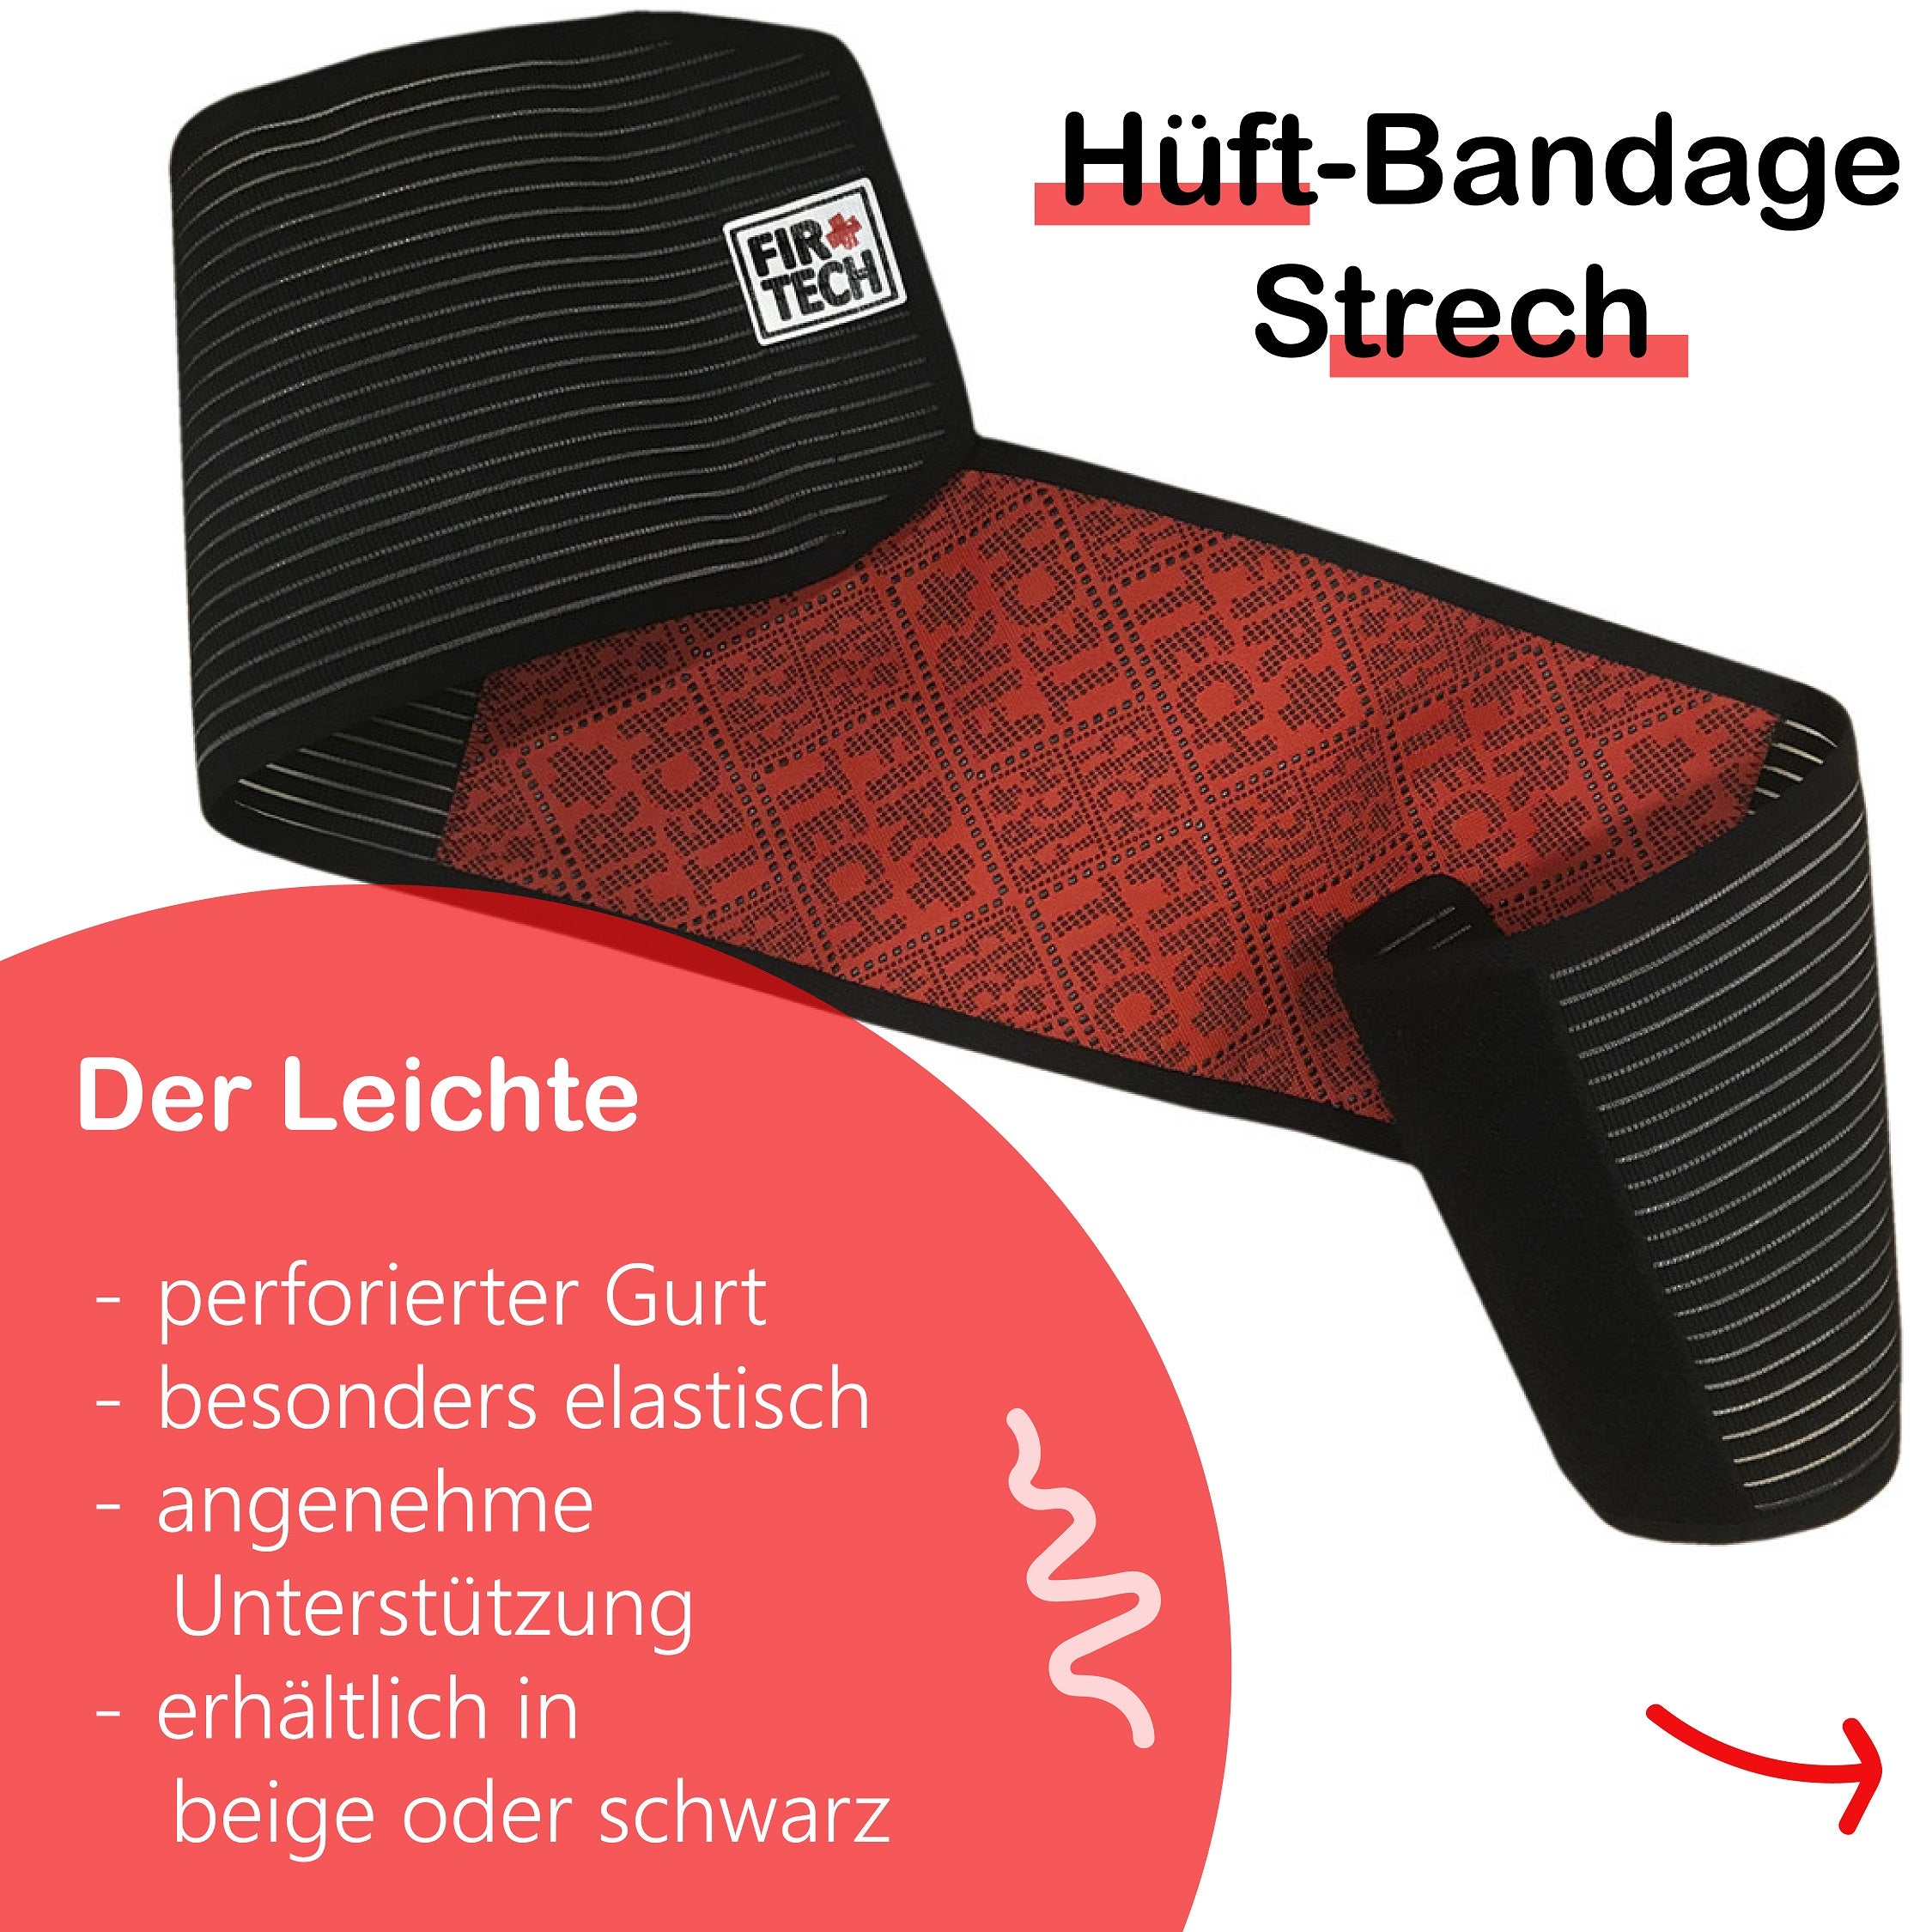 Hüft-Bandage Stretch (16cm) schwarz